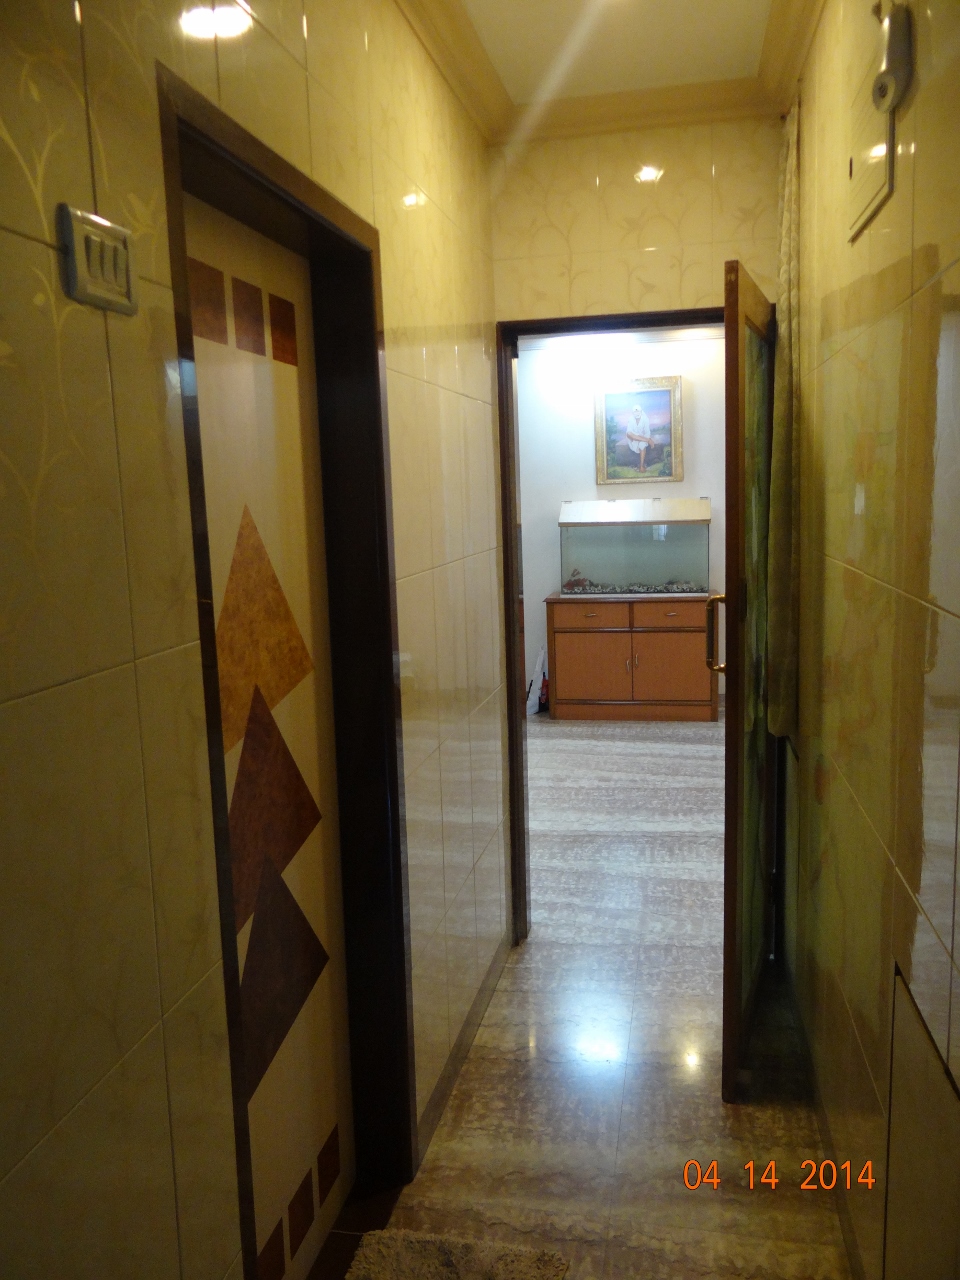 Residential Multistorey Apartment for Sale in Airoli sector 14 , Airoli-West, Mumbai